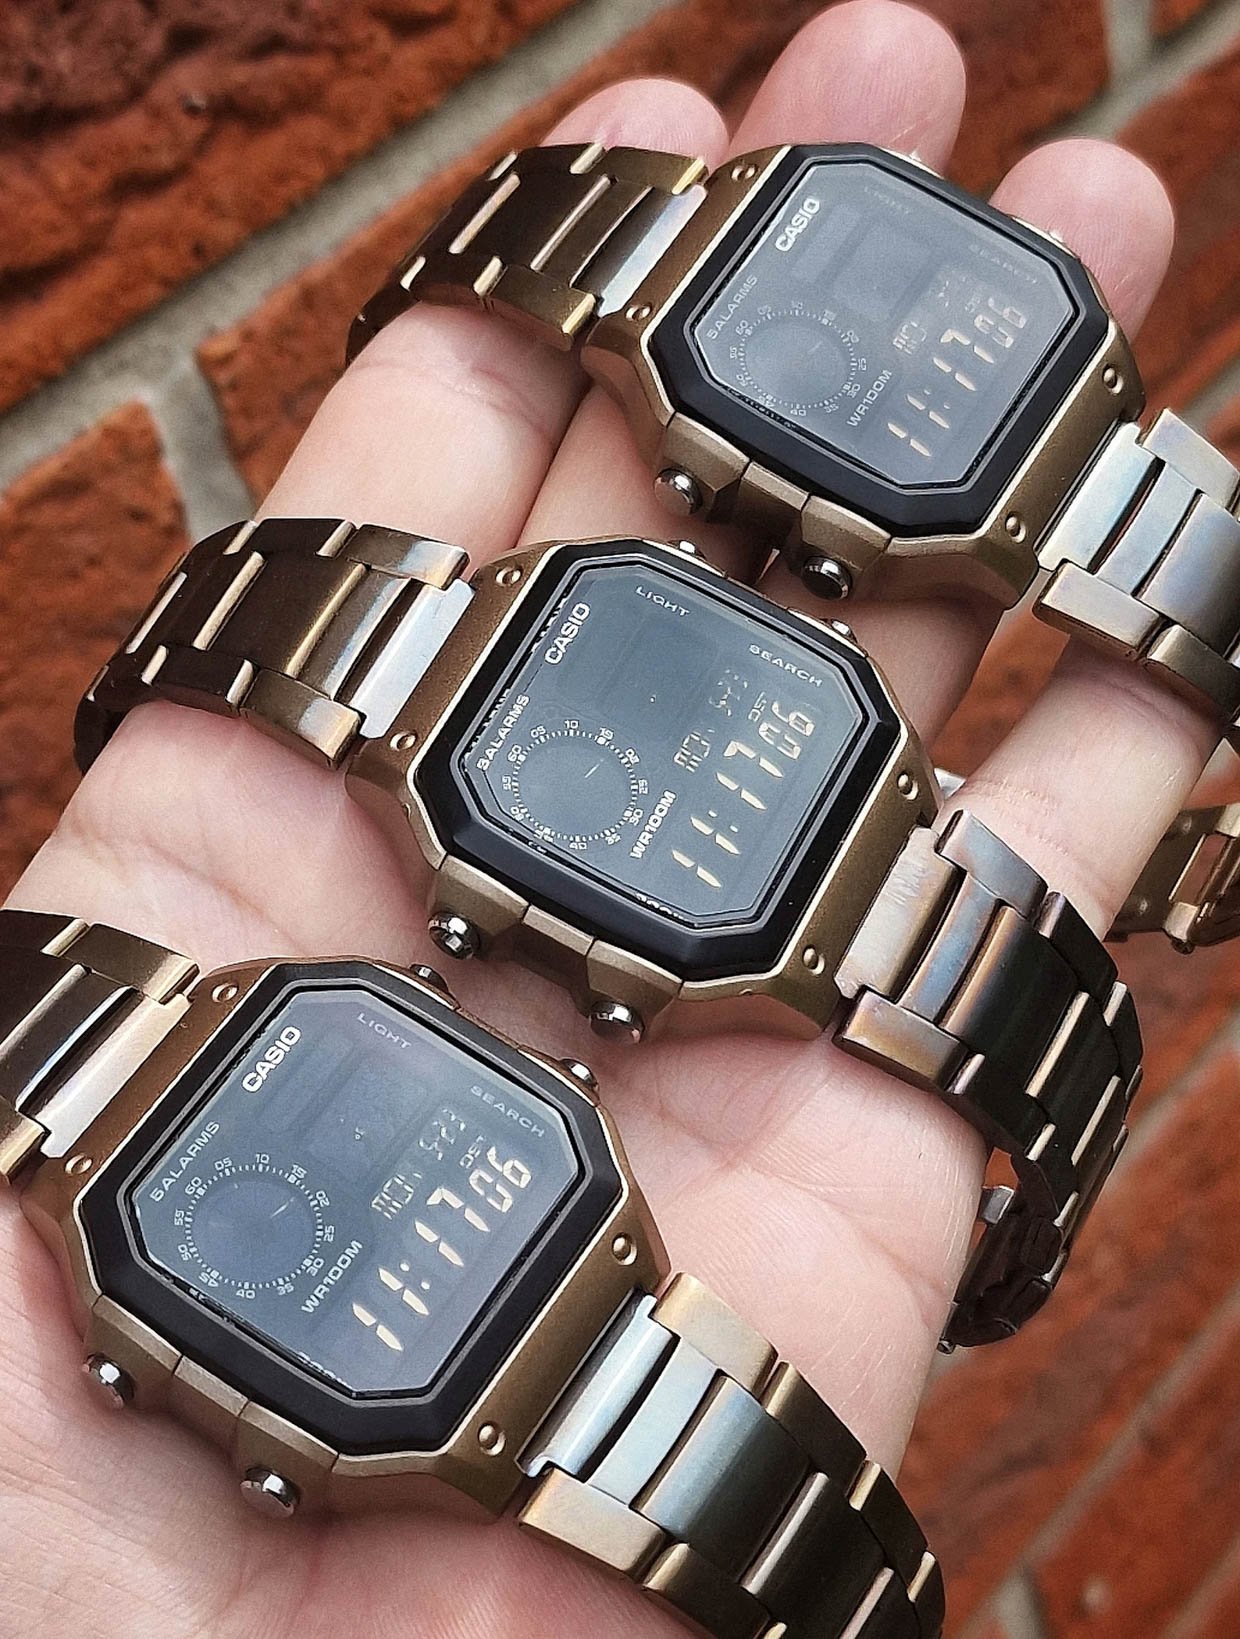 Casio AE-1200 Watch Looks Like a Million